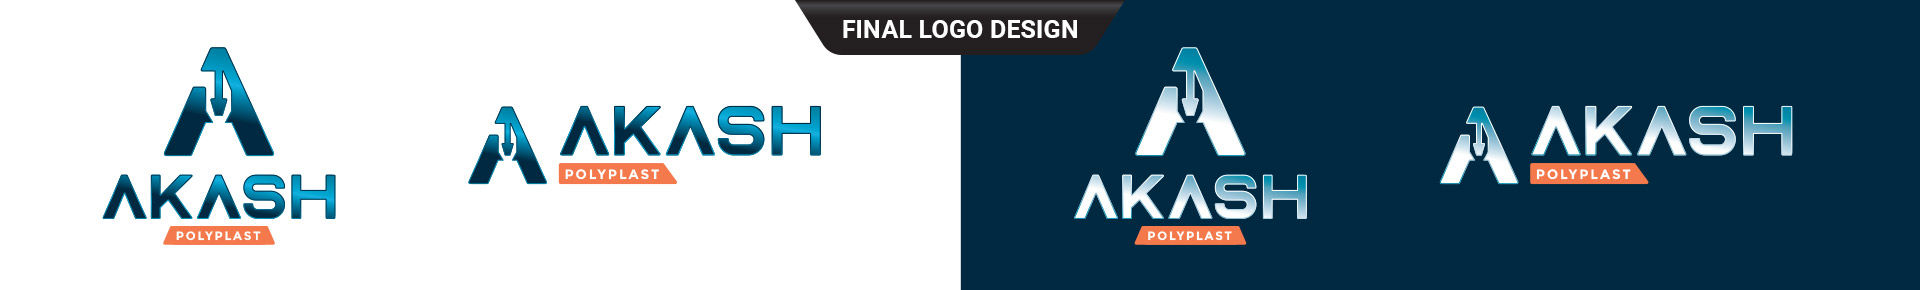 TBD-AkashPolyplast-Final-Logo-Design